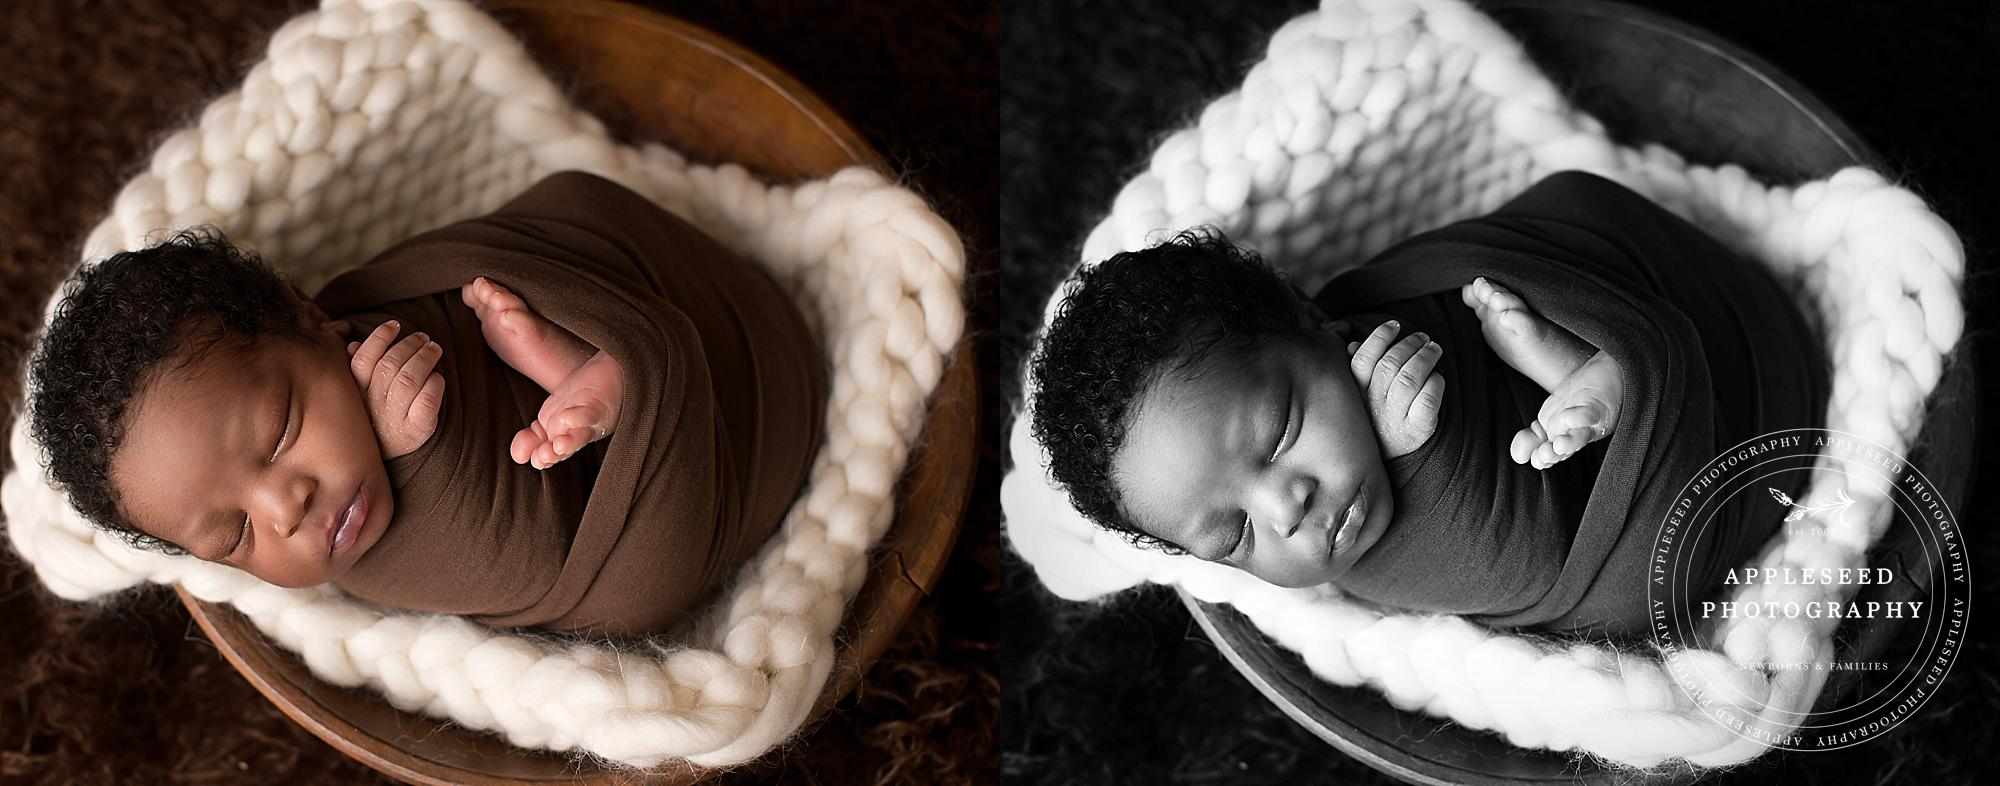 Newborn Photographer Atlanta | Solomon | Appleseed Photography